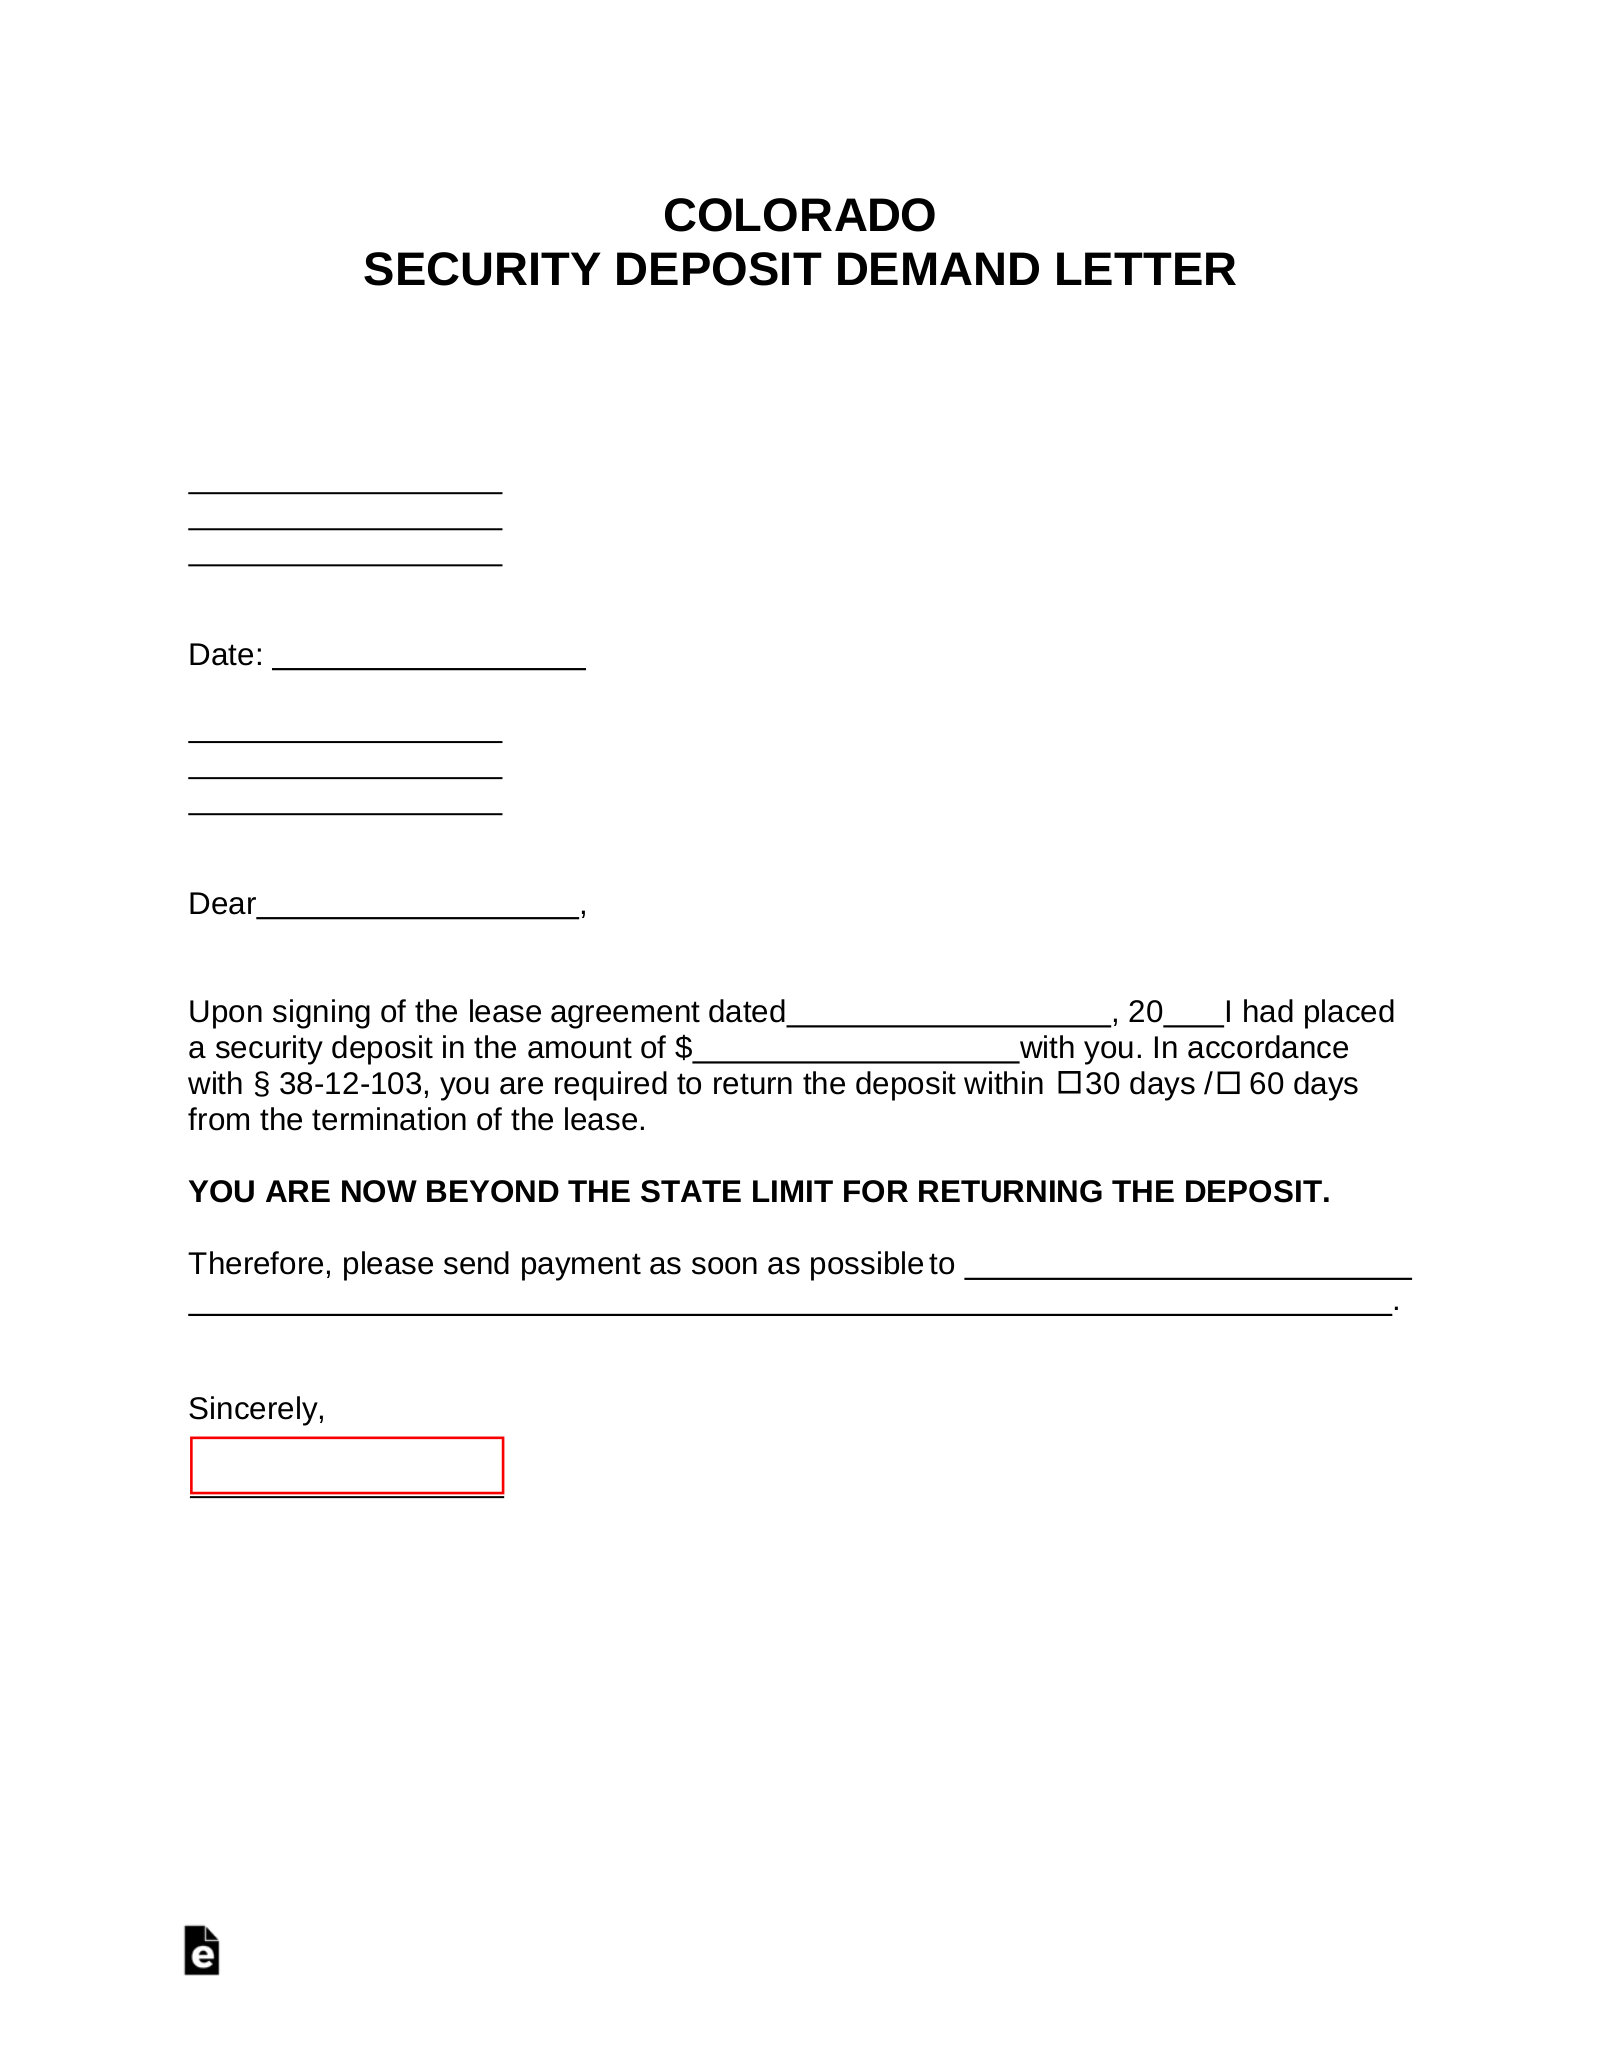 Colorado Security Deposit Demand Letter